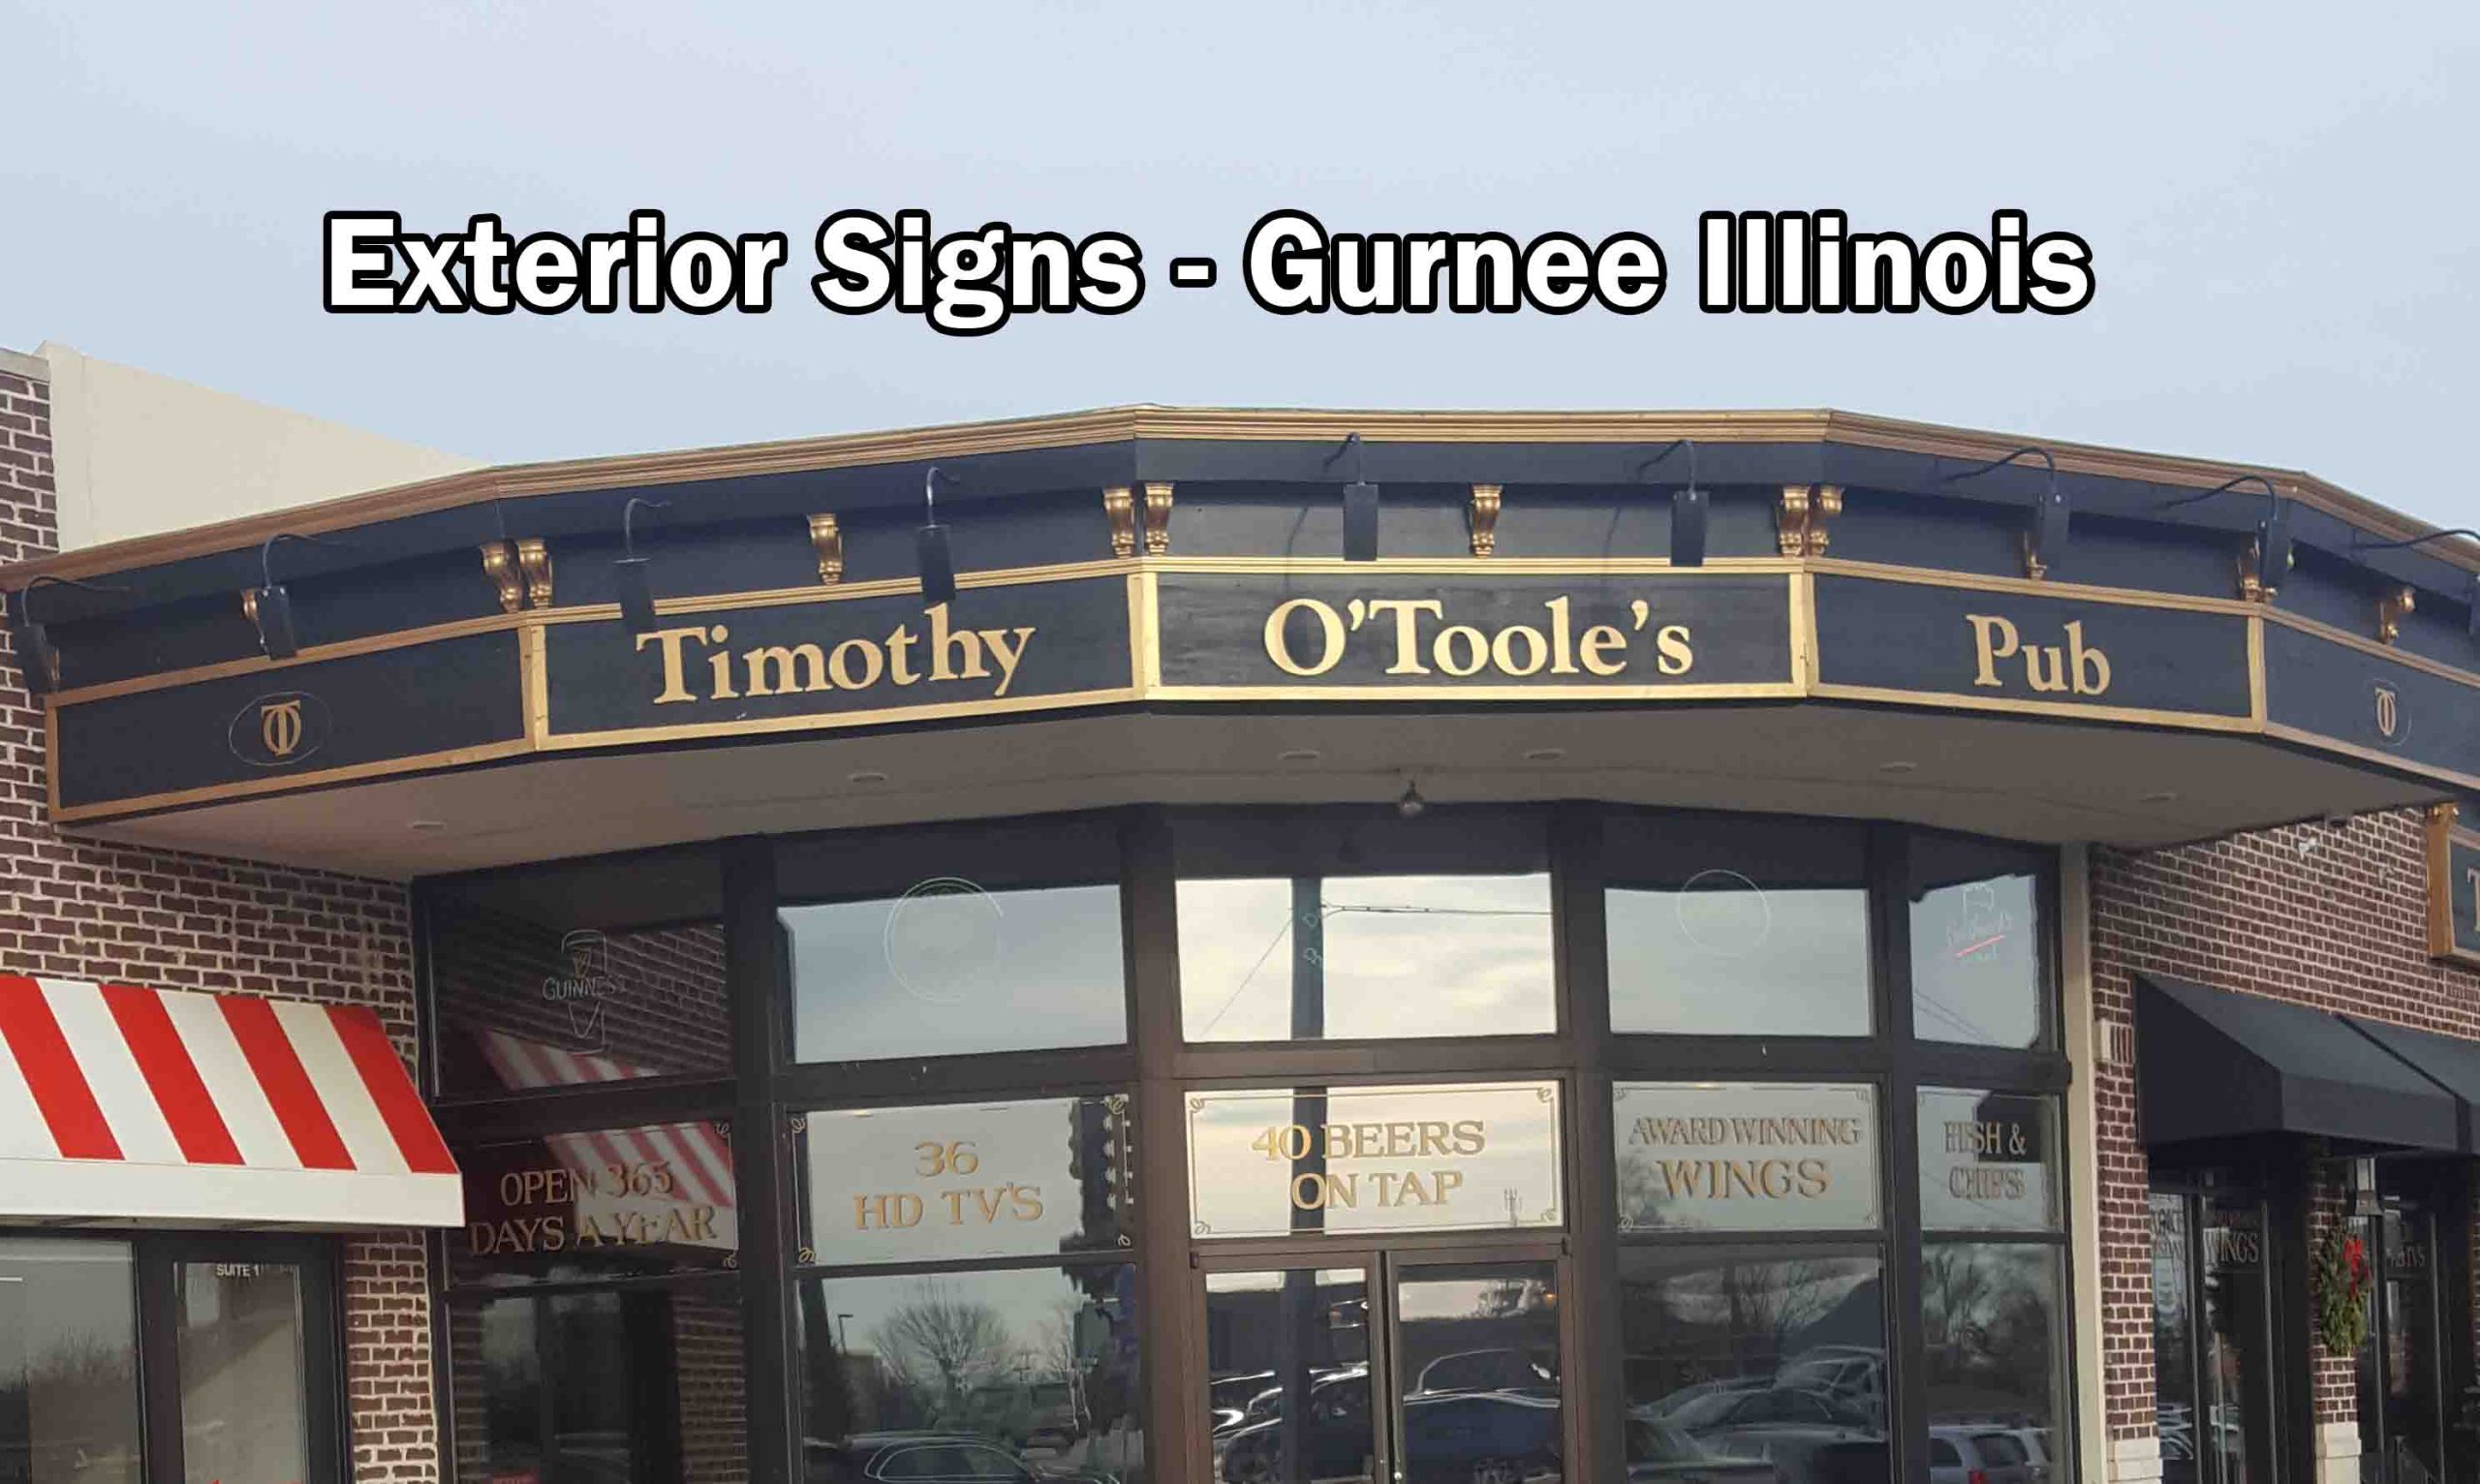 Exterior Signs - Gurnee Illinois